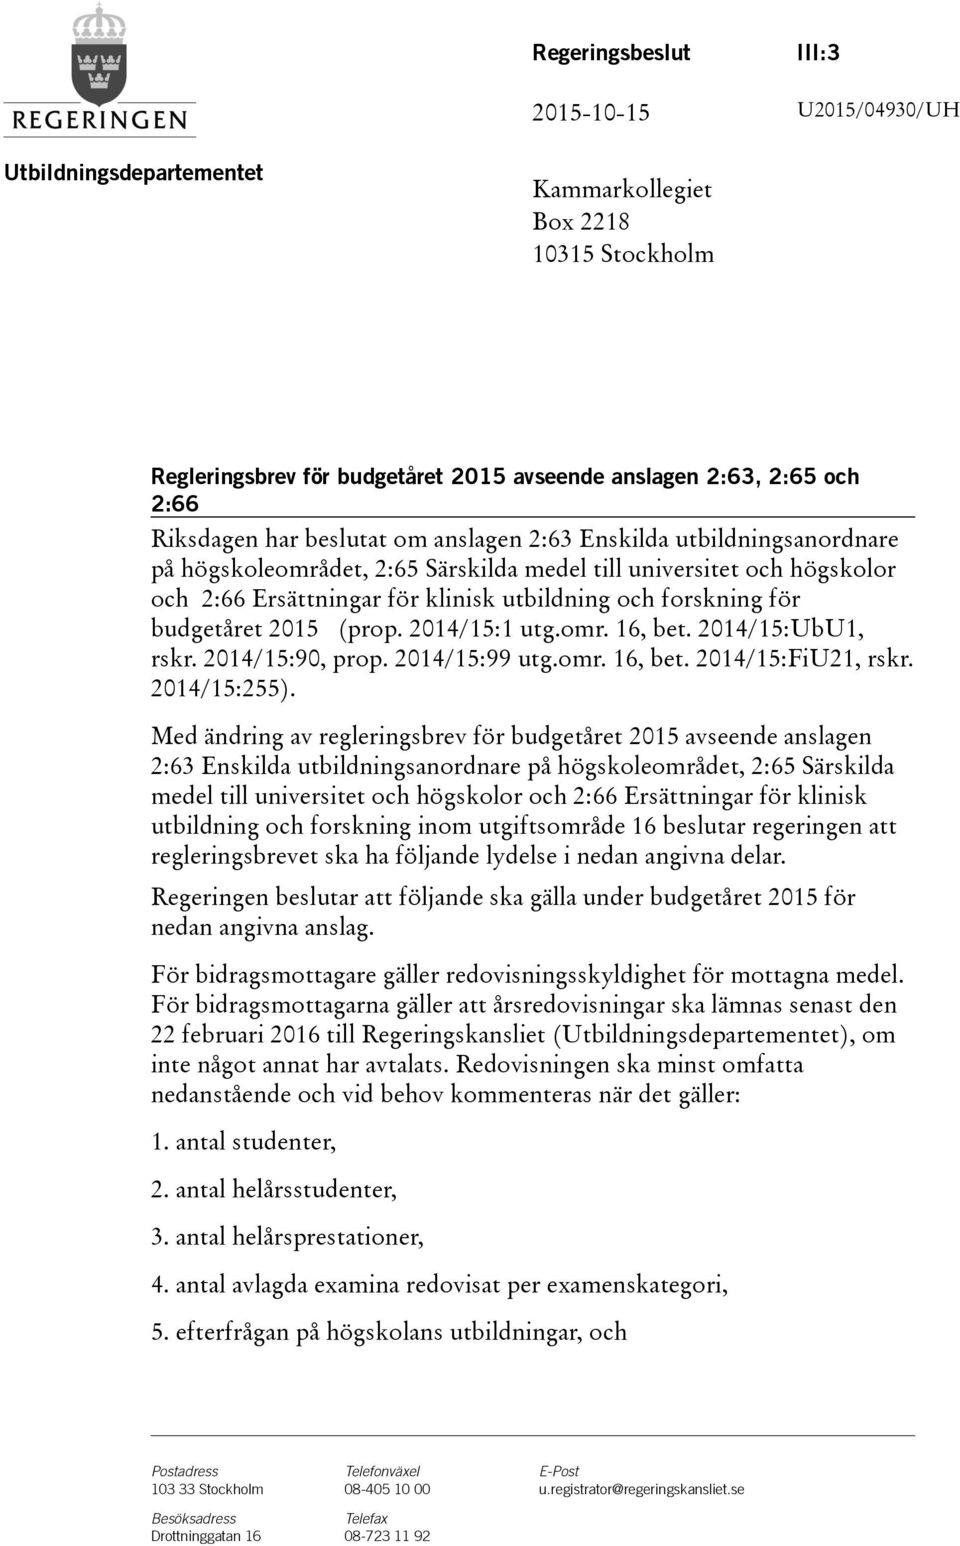 budgetåret 2015 (prop. 2014/15:1 utg.omr. 16, bet. 2014/15:UbU1, rskr. 2014/15:90, prop. 2014/15:99 utg.omr. 16, bet. 2014/15:FiU21, rskr. 2014/15:255).